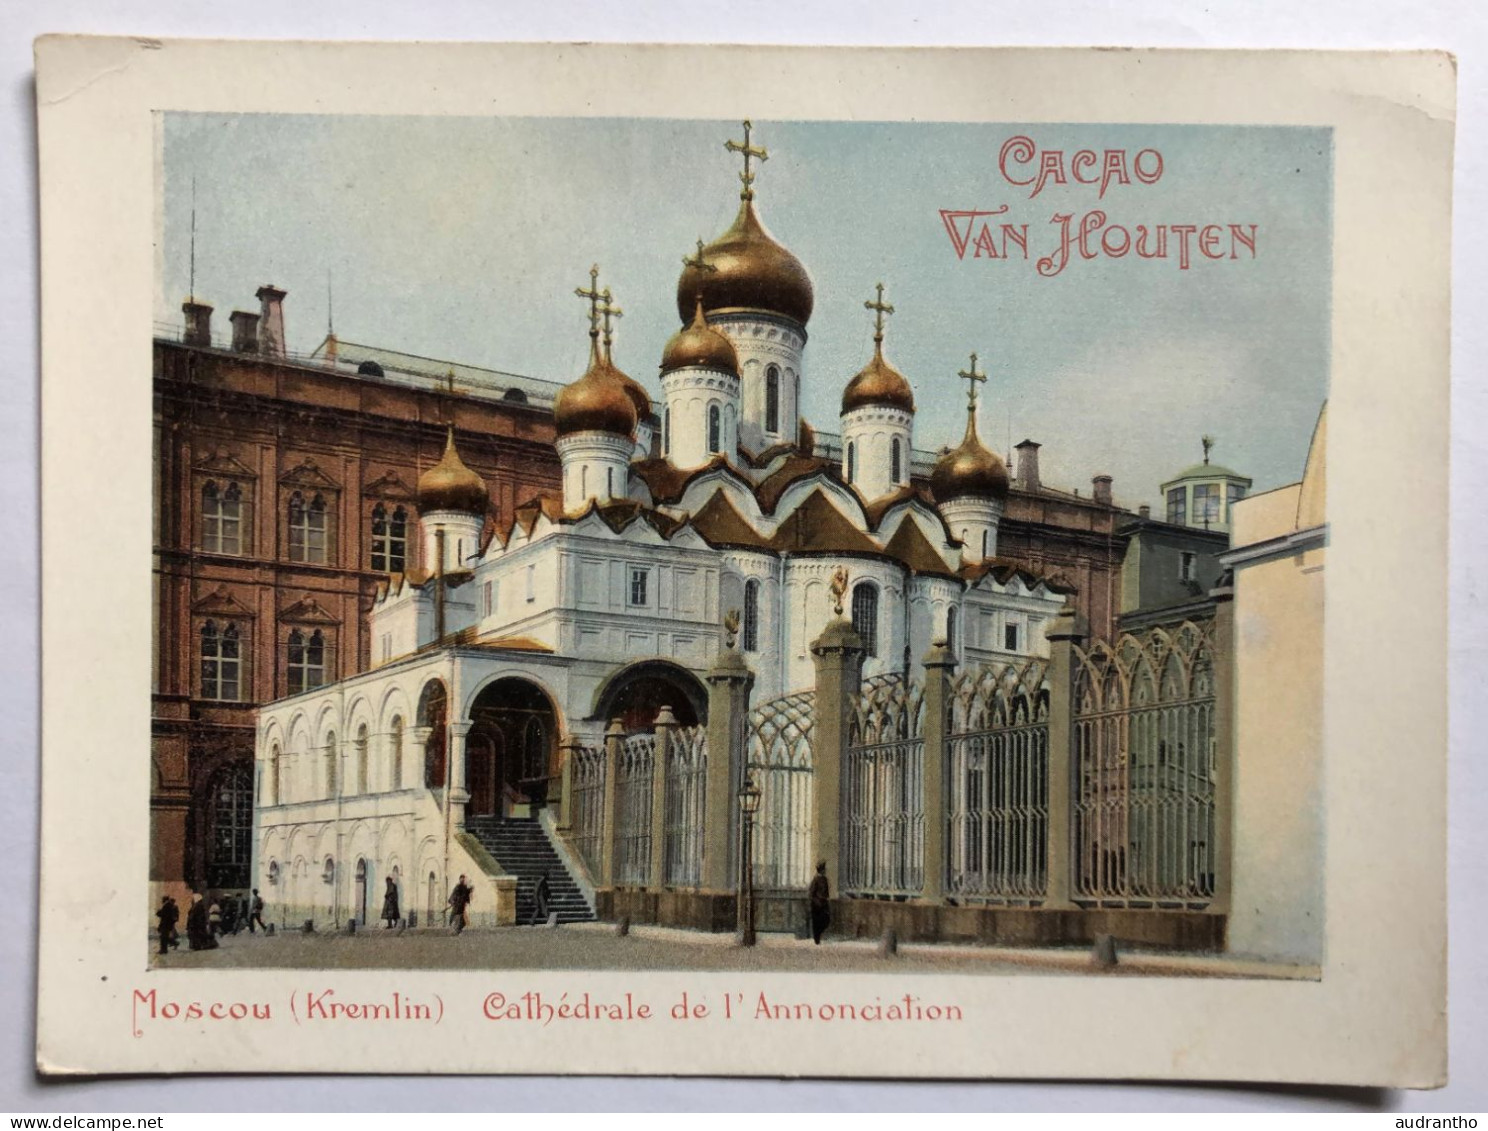 Grande Chromo - Cacao VAN HOUTEN - Moscou Kremlin - Cathédrale De L'annonciation - Van Houten